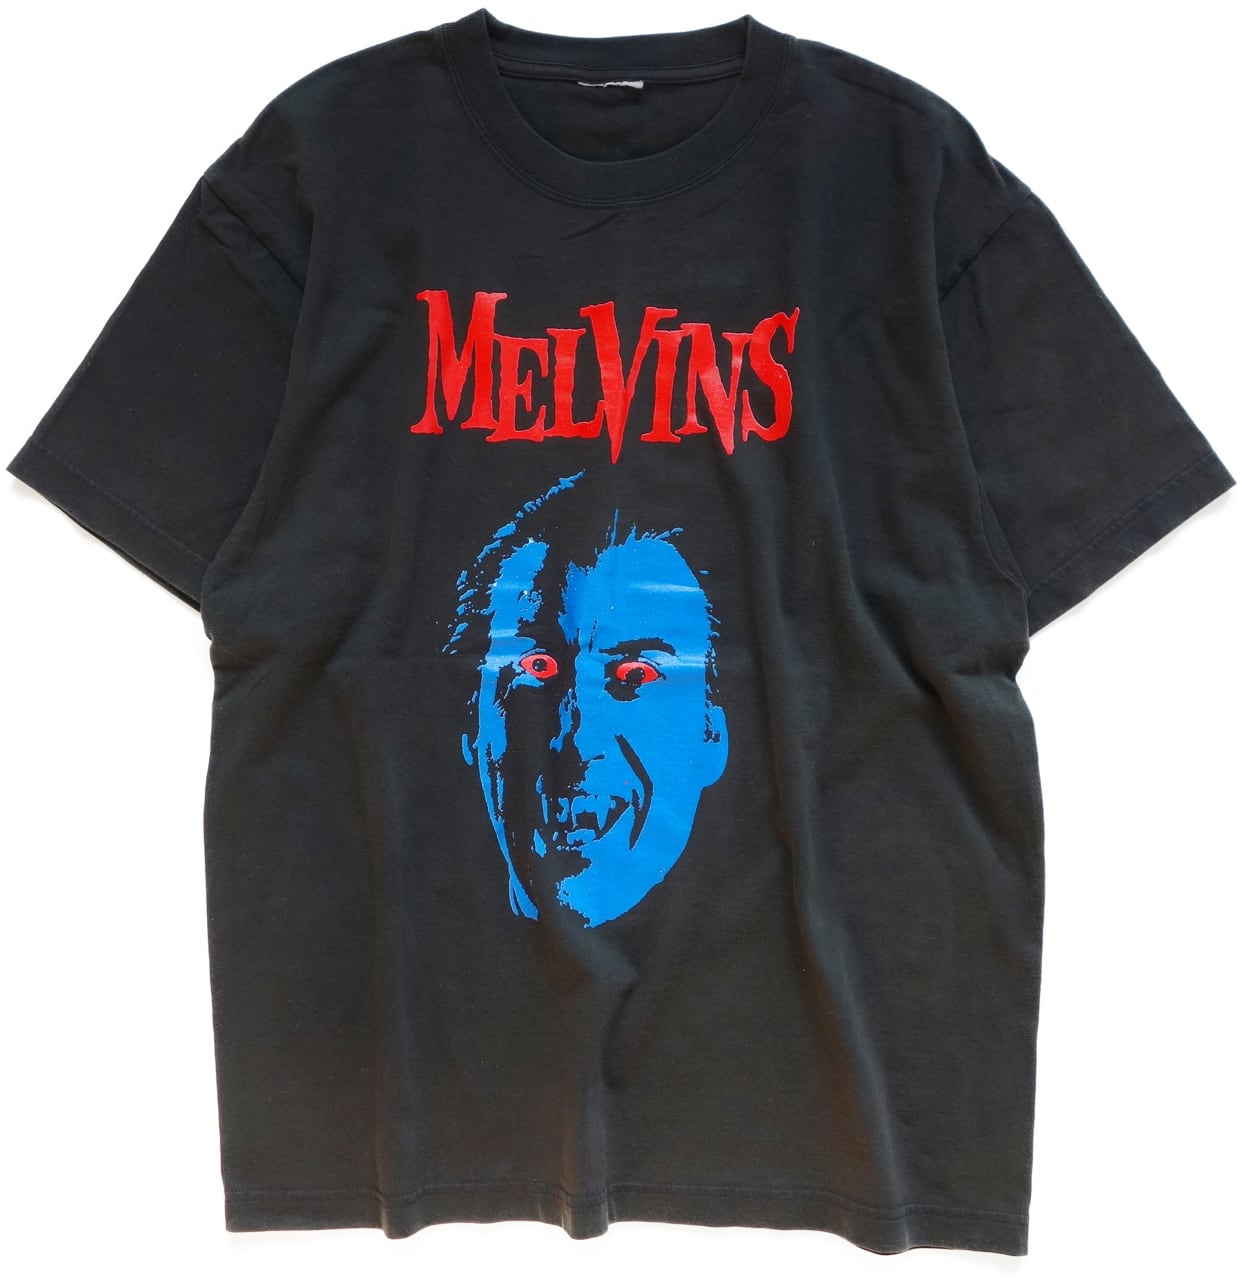 MELVINSメルヴィンズ2019年来日公演購入TシャツMサイズ